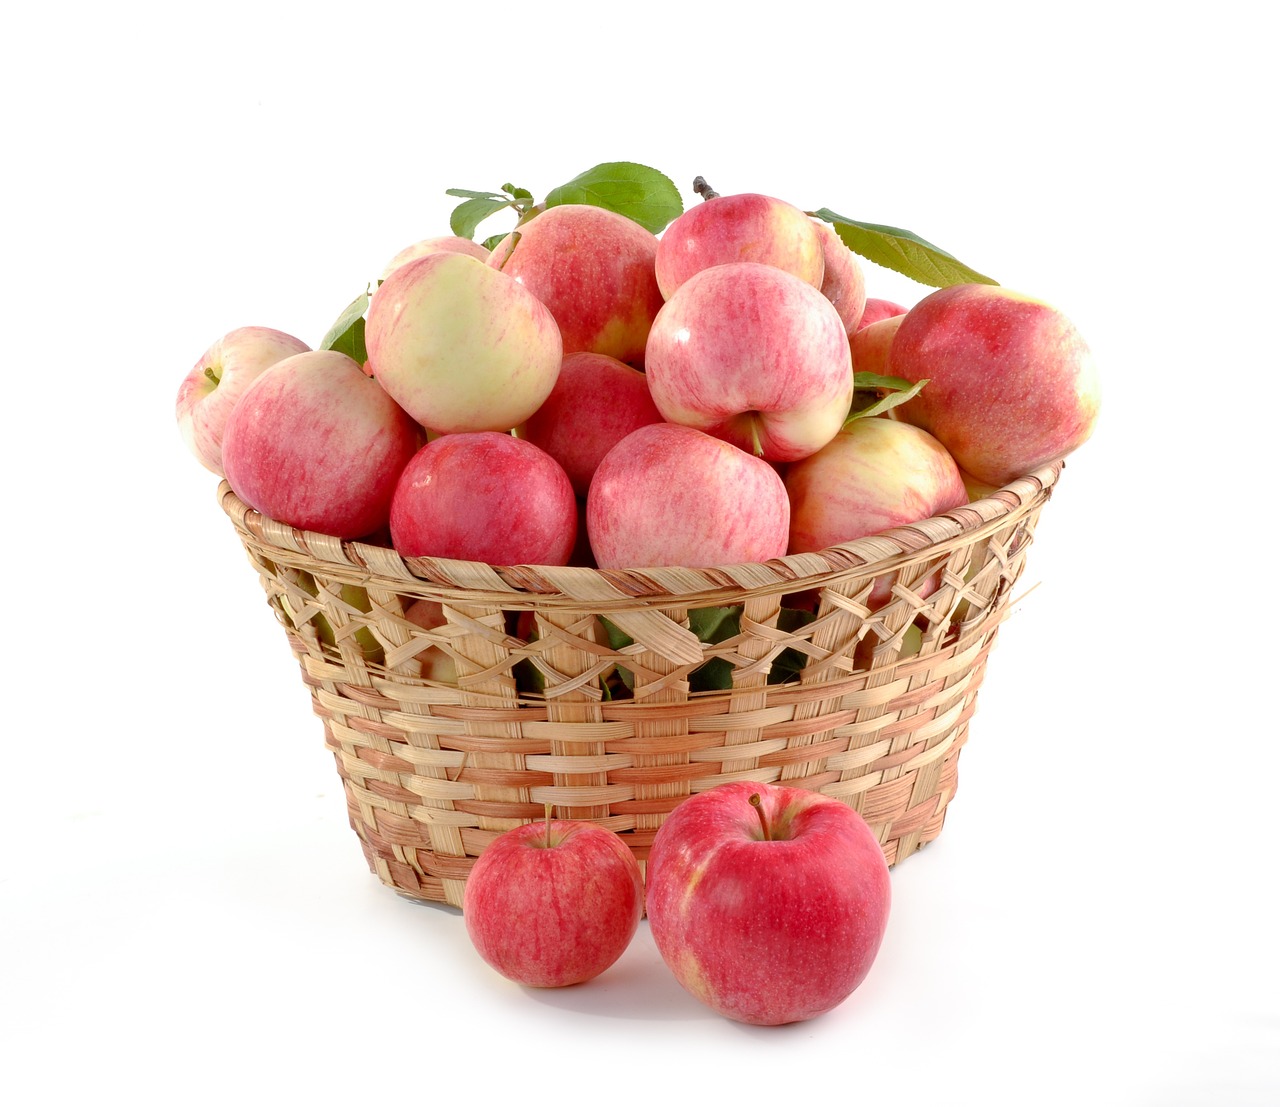 Apples Nutrition & Health Benefits